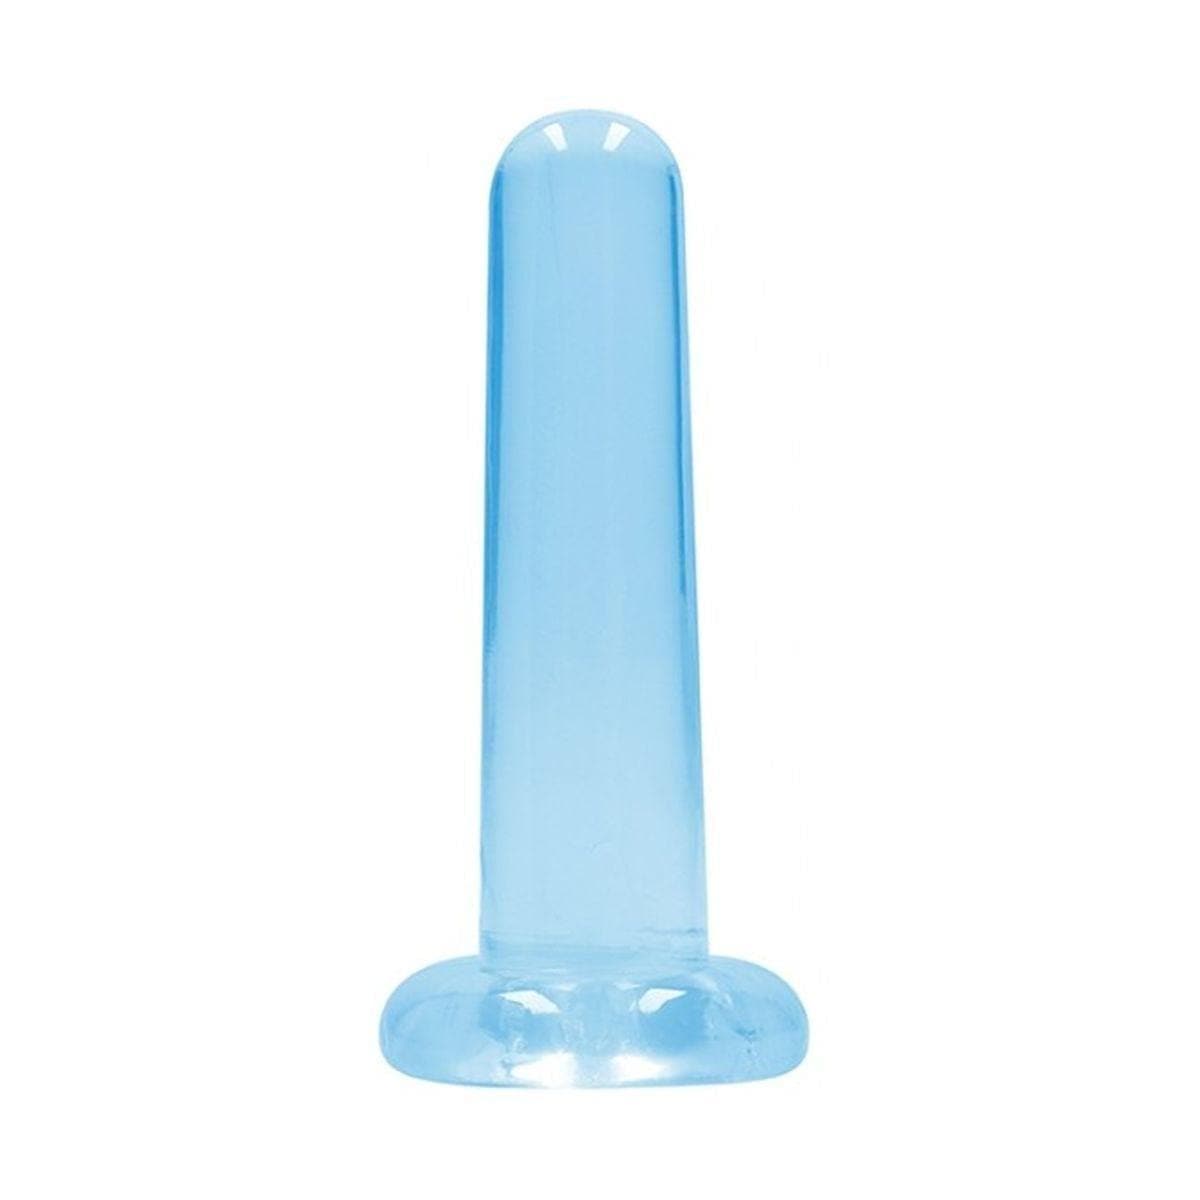 Dildo RealRock Liso Crystal Clear, 13.5cm Ø3cm  Perola Sexshop Almada Azul  